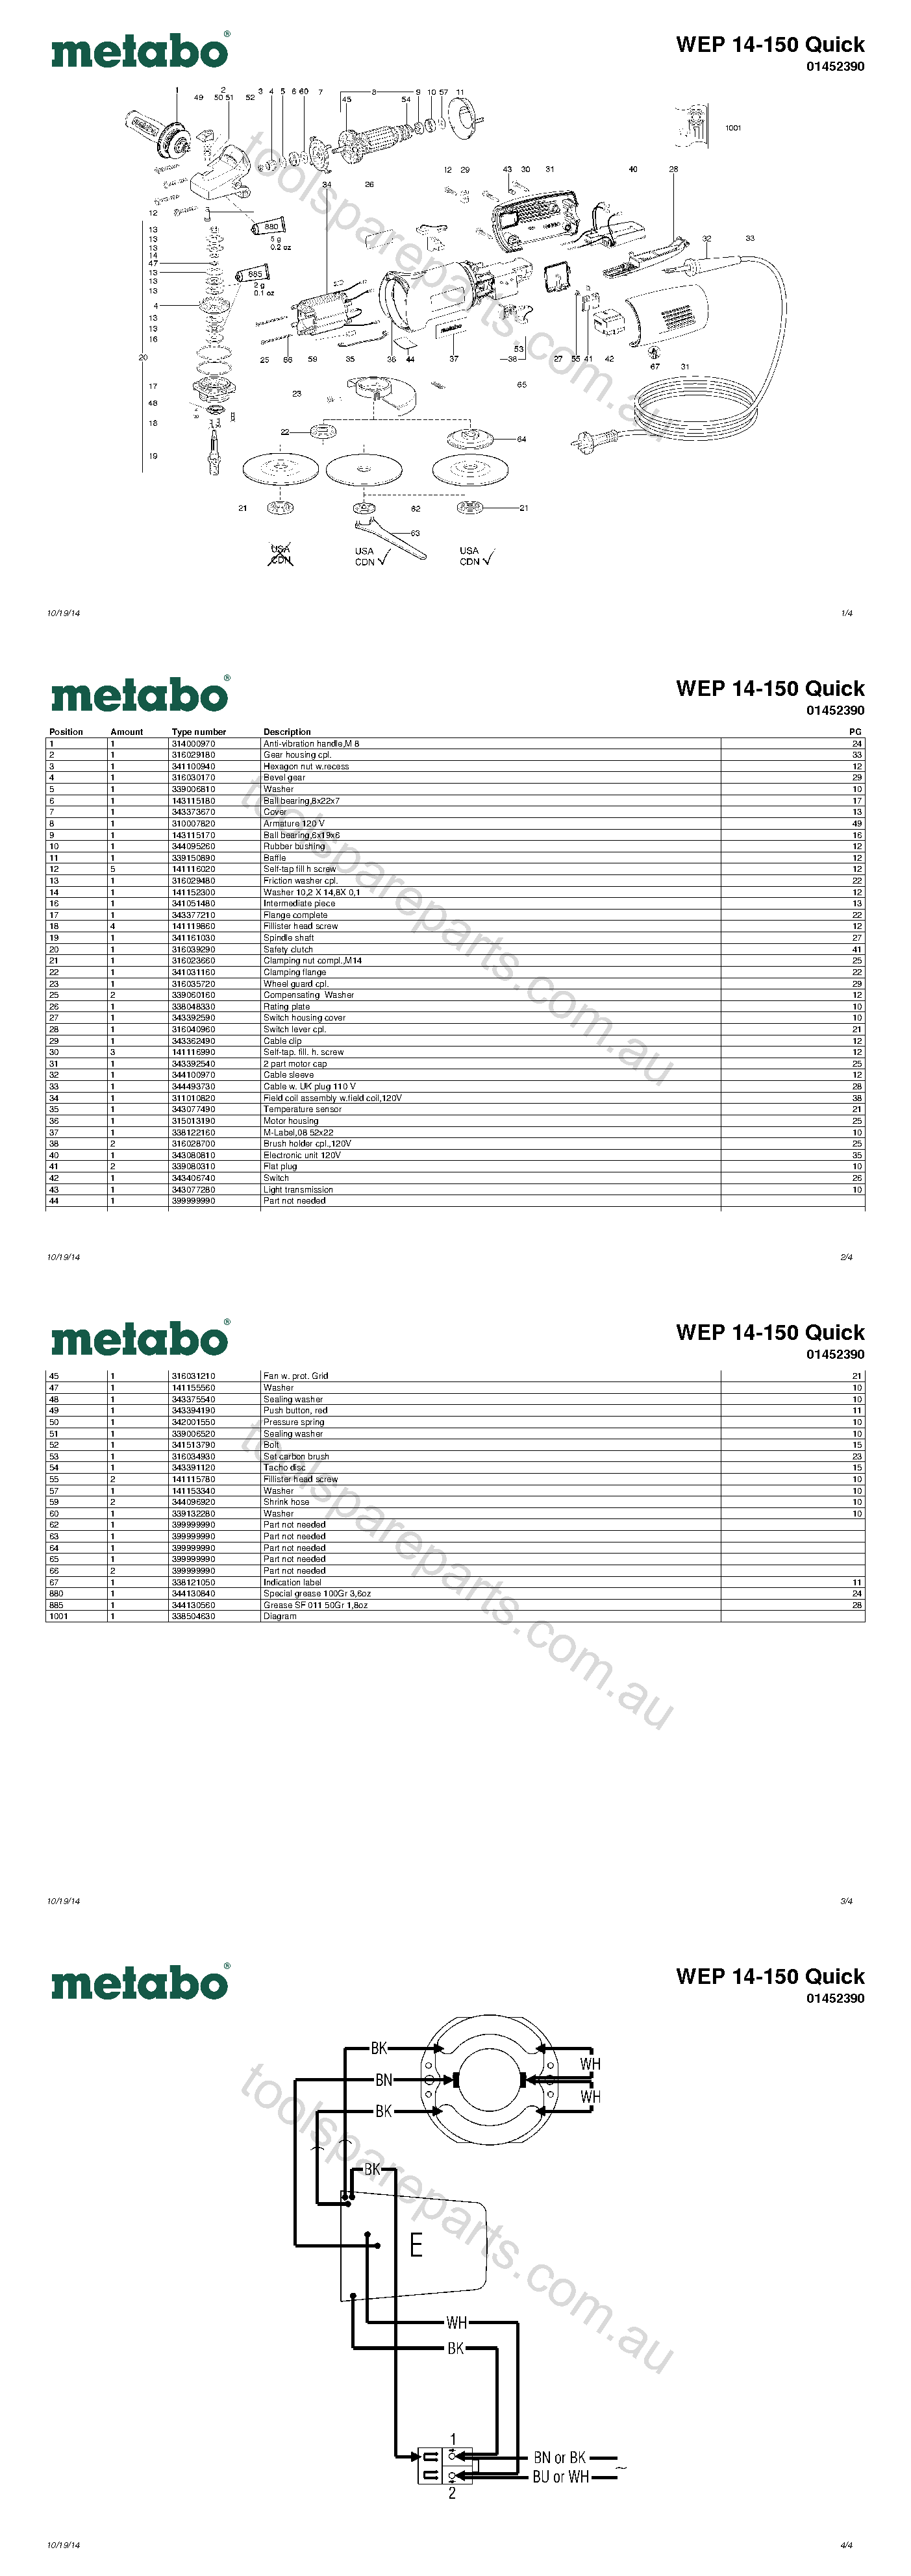 Metabo WEP 14-150 Quick 01452390  Diagram 1